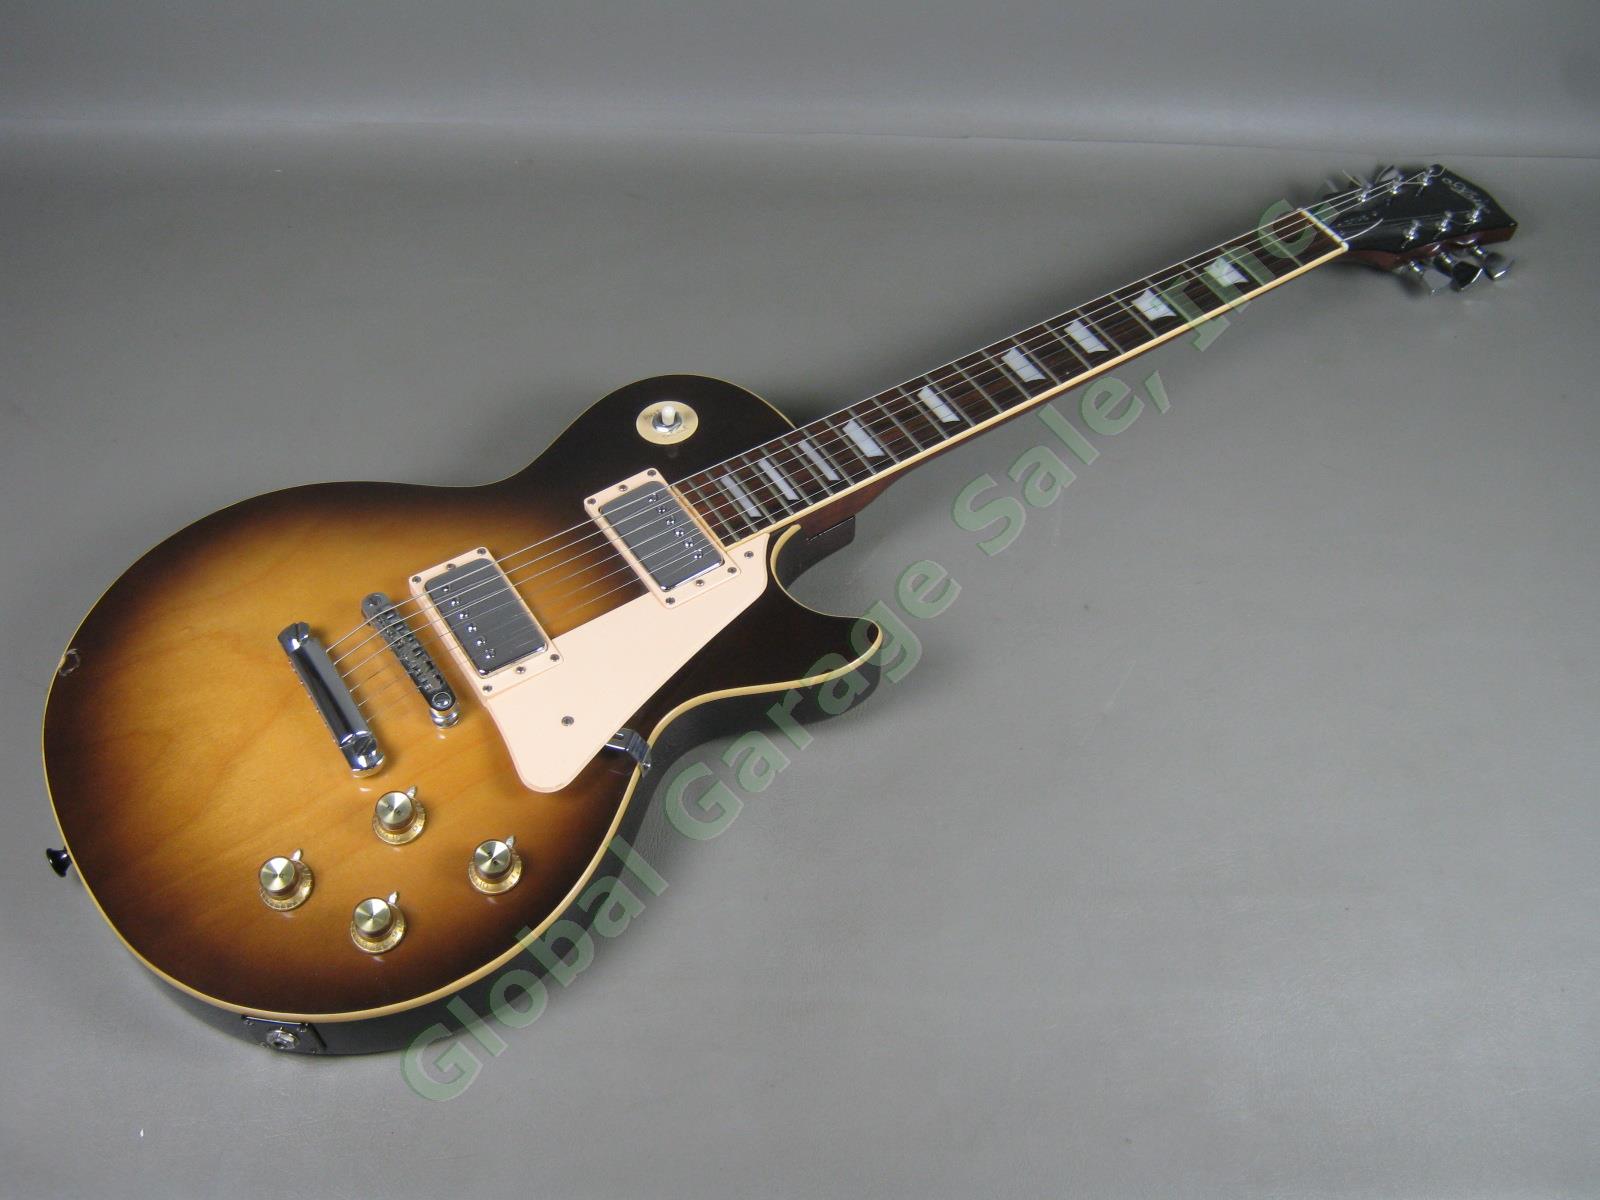 Vtg Matsumoku Aria Mach 1 Les Paul Copy Electric Guitar MIJ Made in Japan NO RES 1